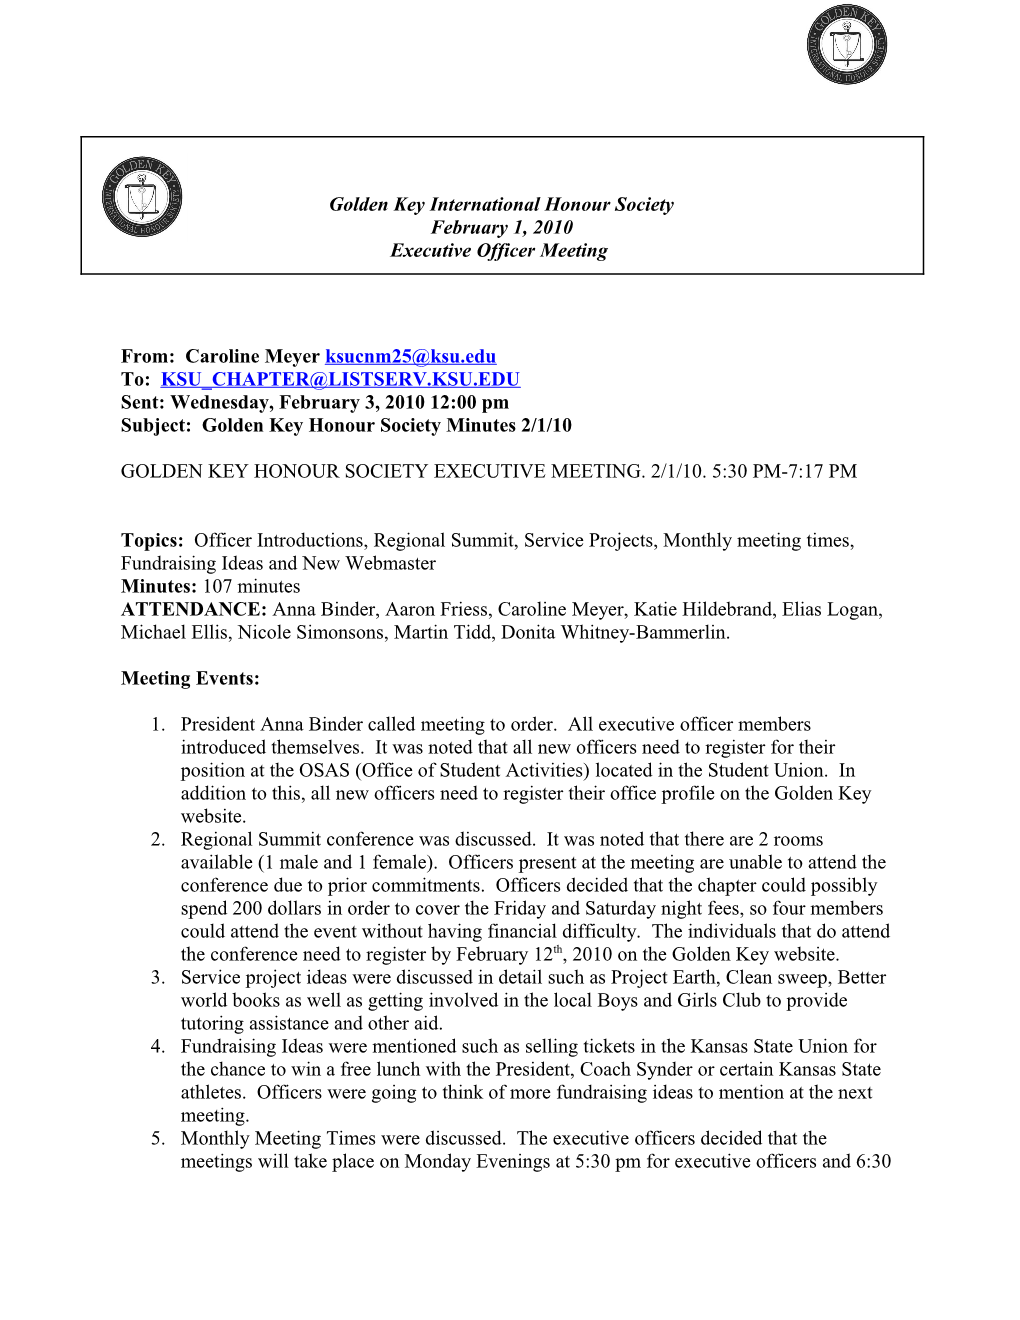 Subject: Golden Key Honour Society Minutes 2/1/10